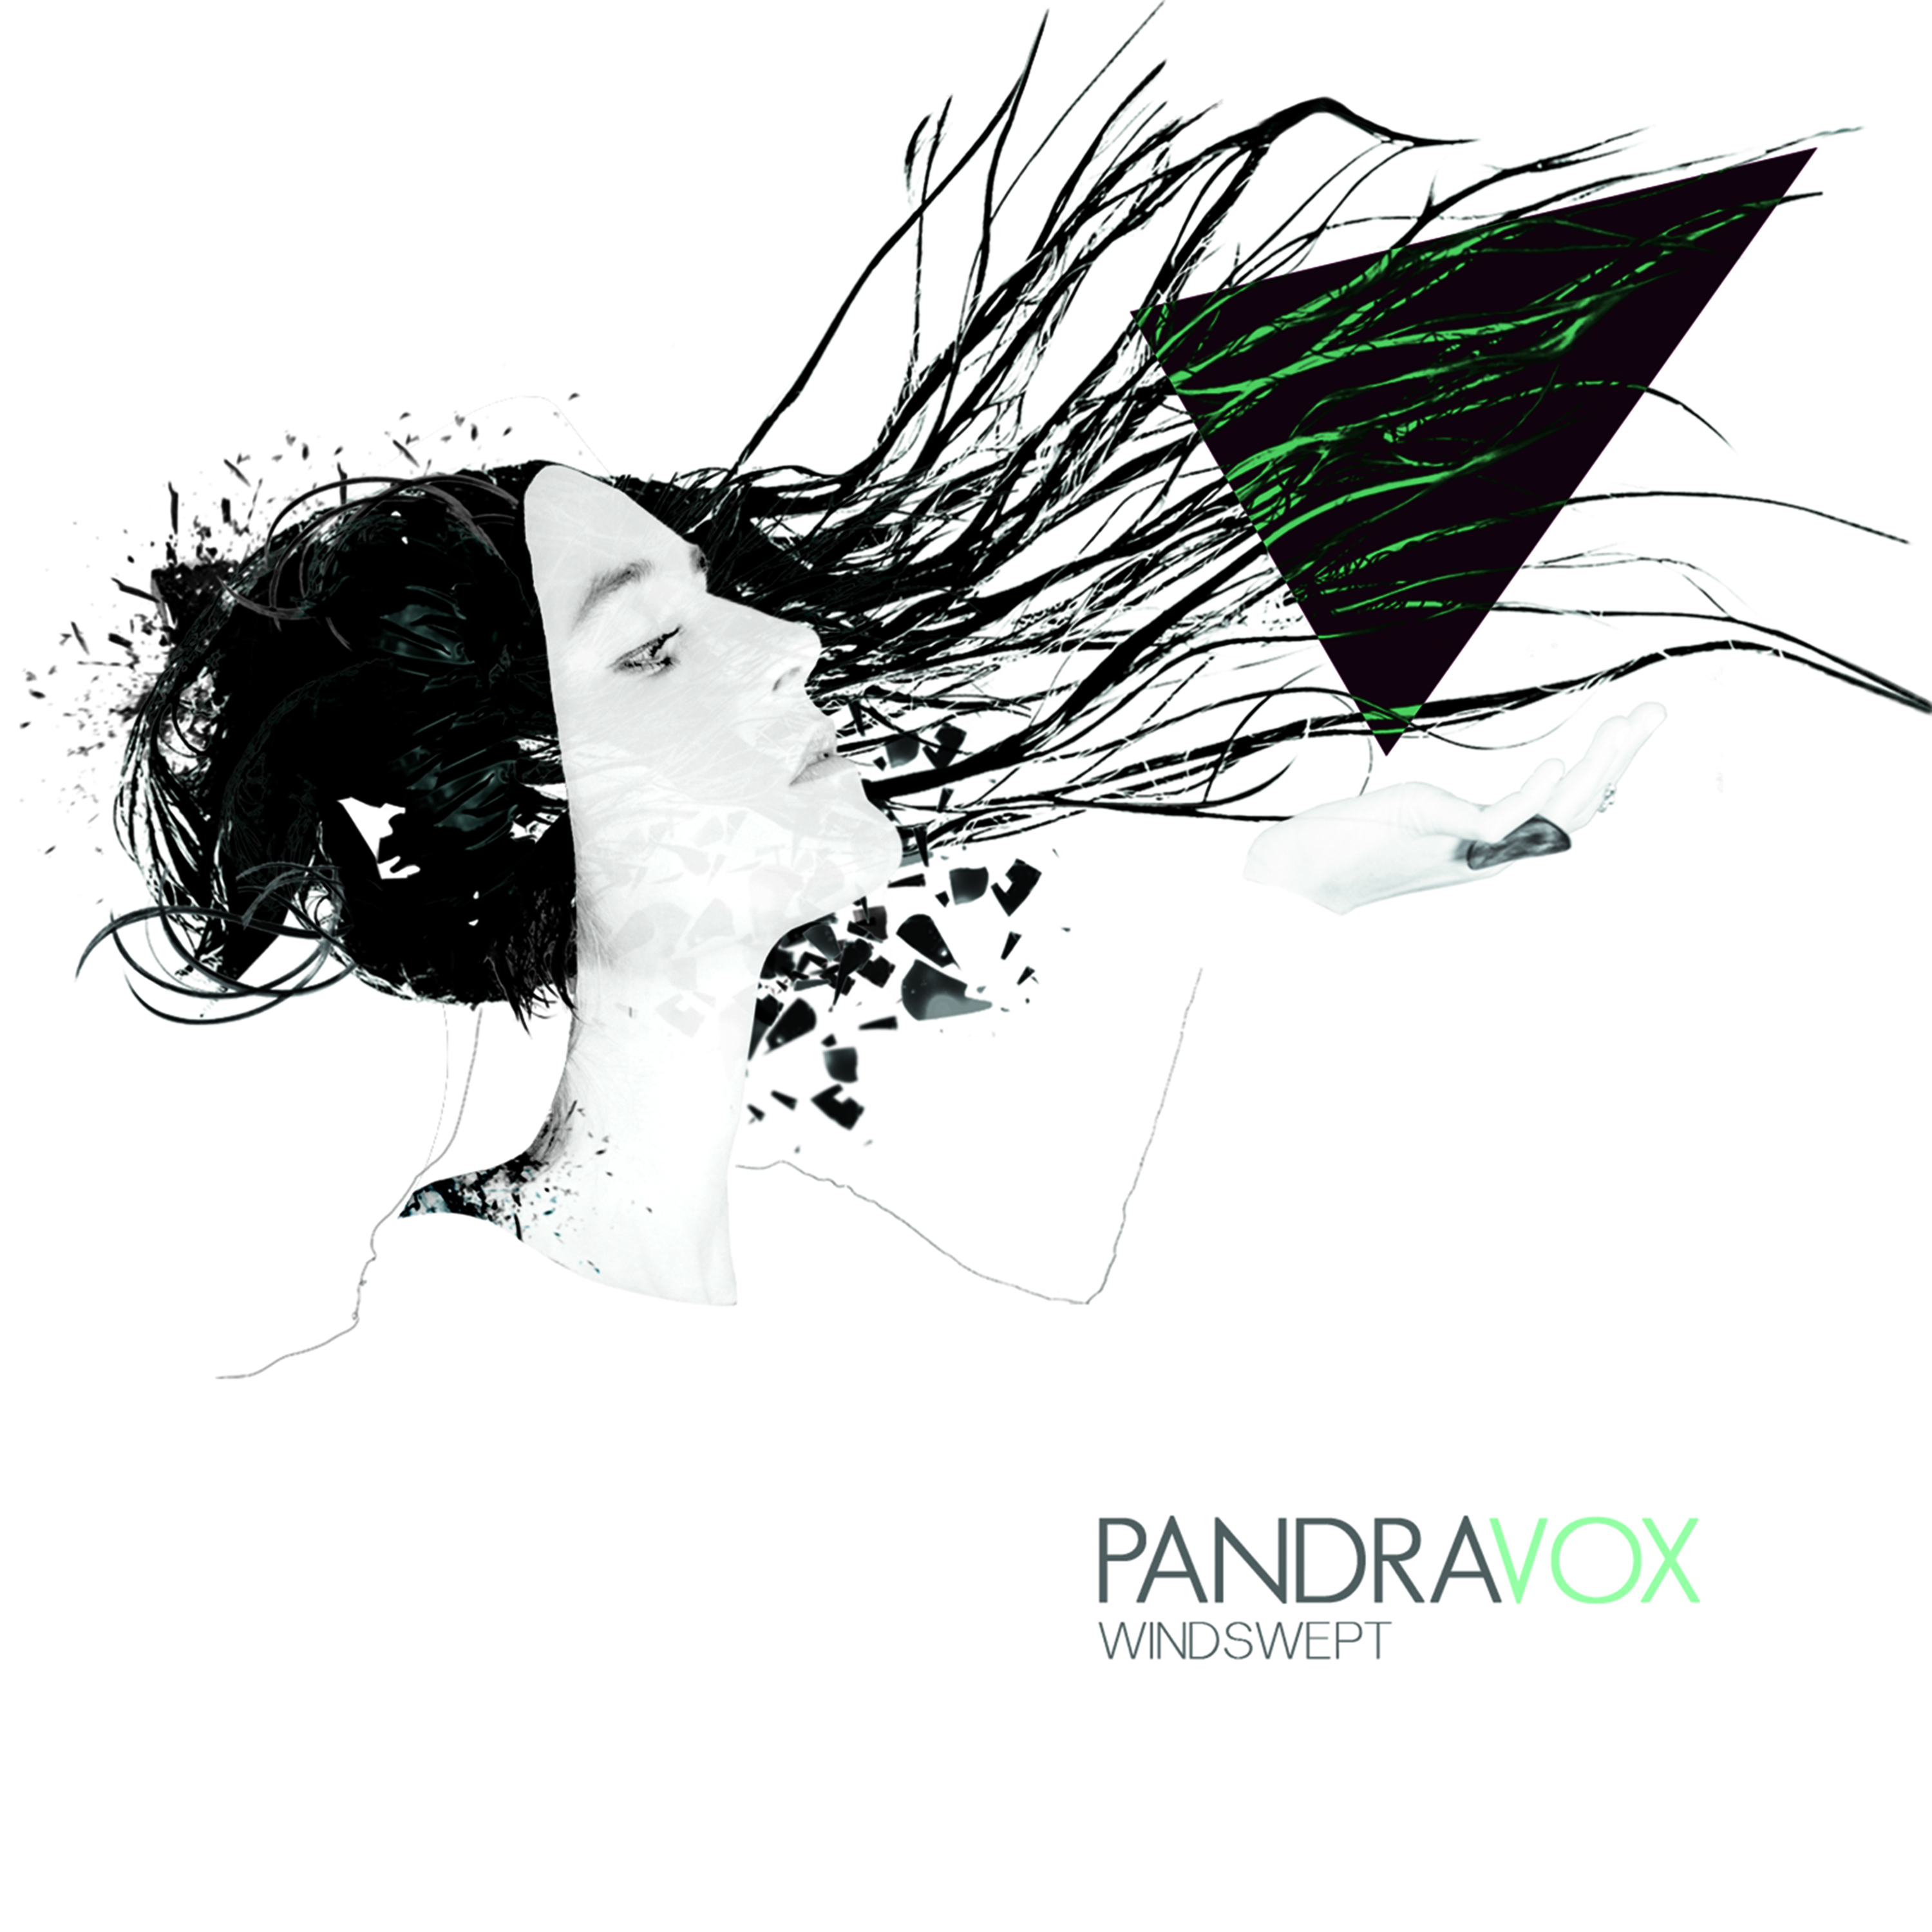 Pandra Vox – musique